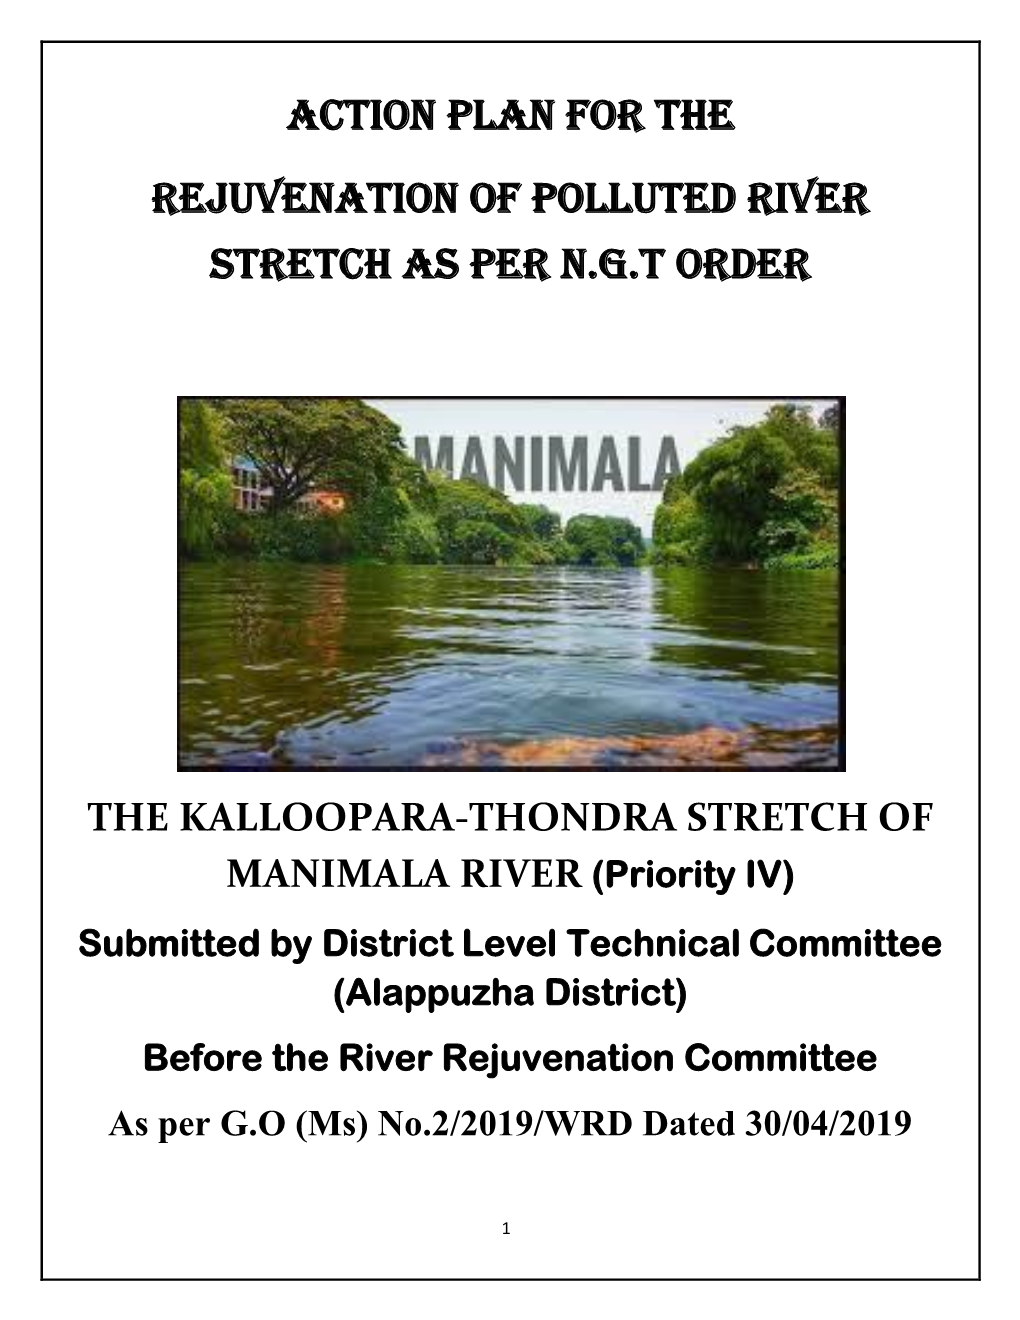 The Kalloopara-Thondra Stretch of Manimala River